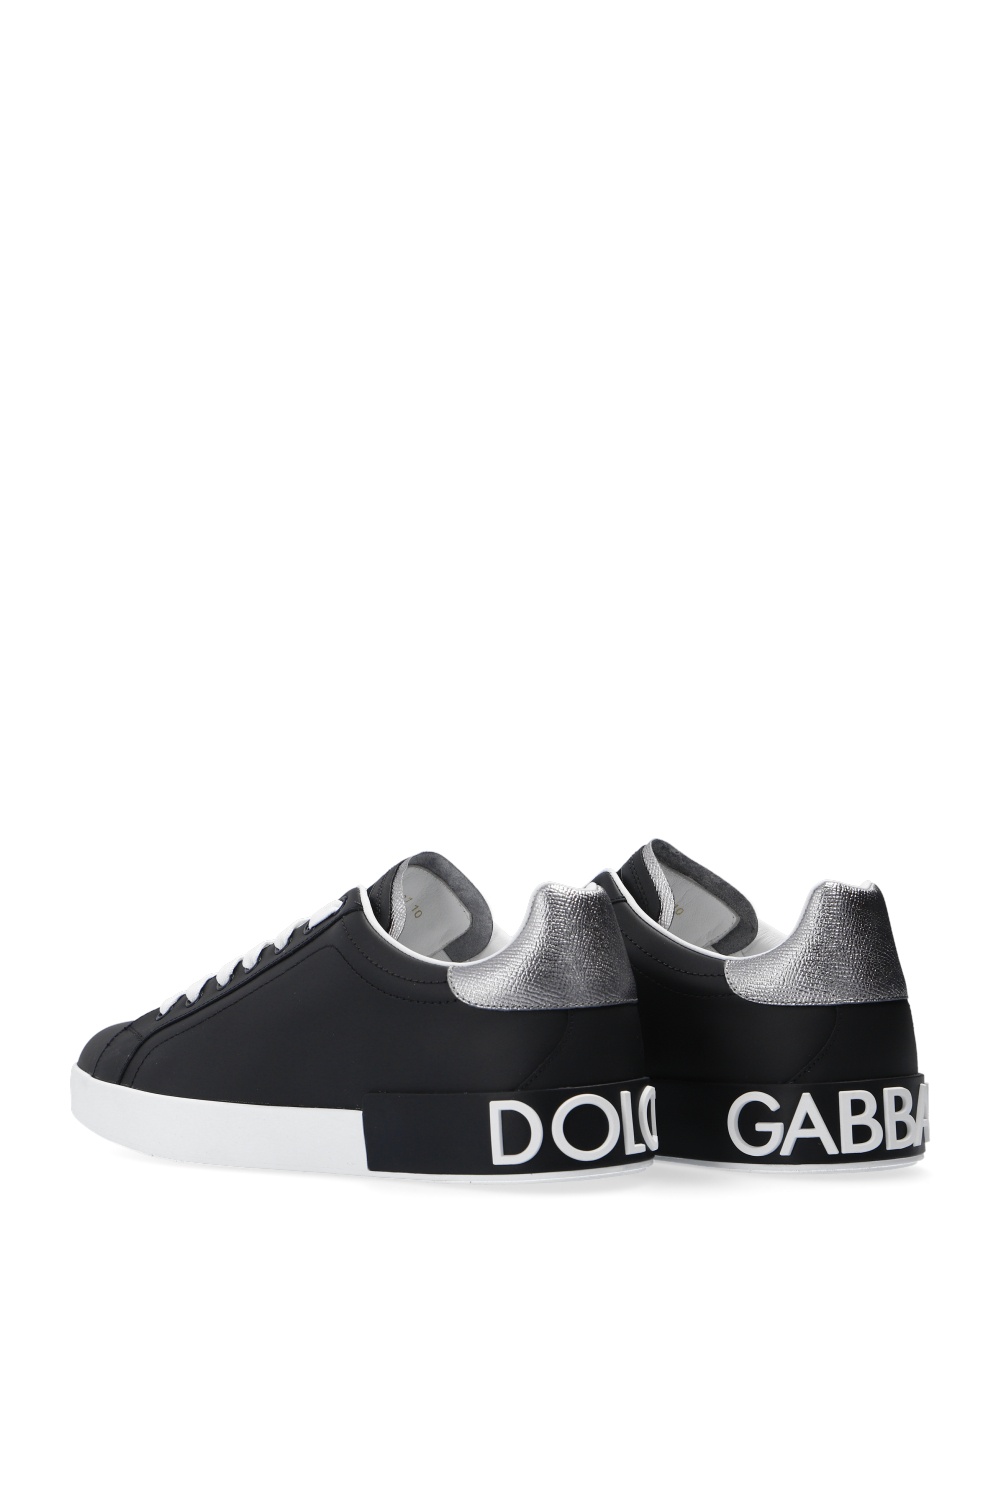 dolce gabbana embroidered motif t shirt item ‘Portofino’ sneakers